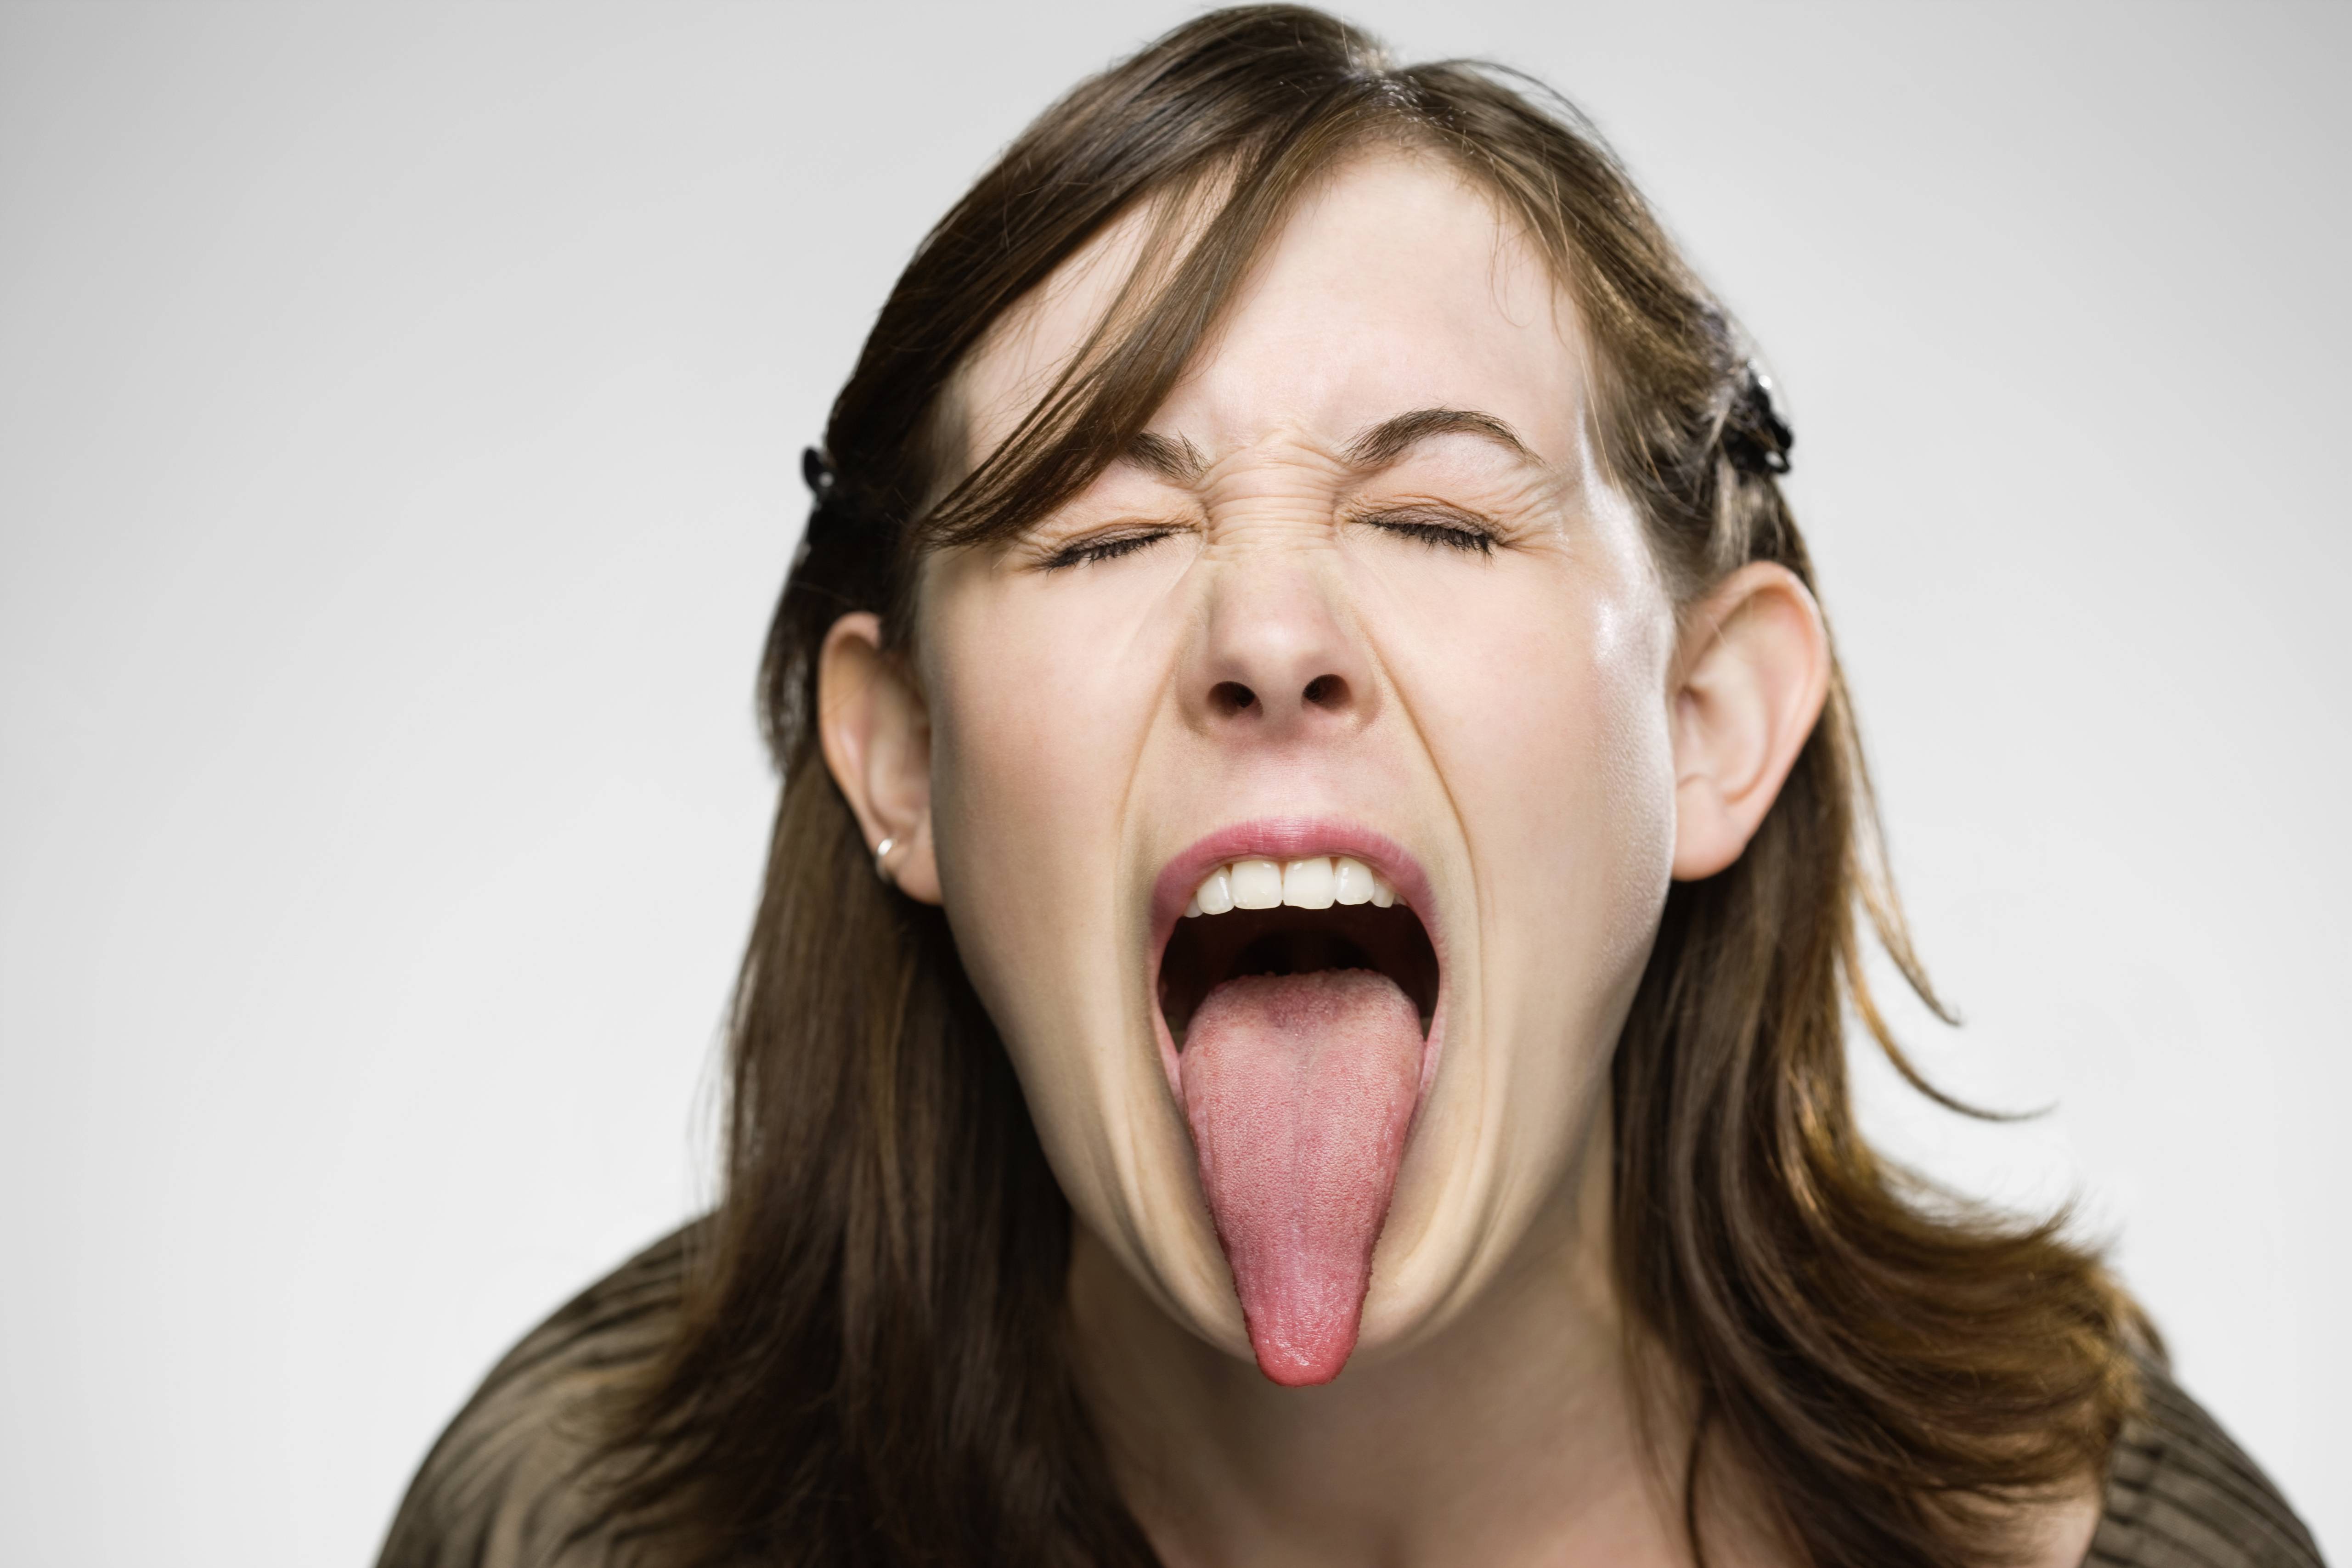 Sister mouth. Женщина с высунутым языком. Открытый рот женщины. Женщина с открытым ртом.